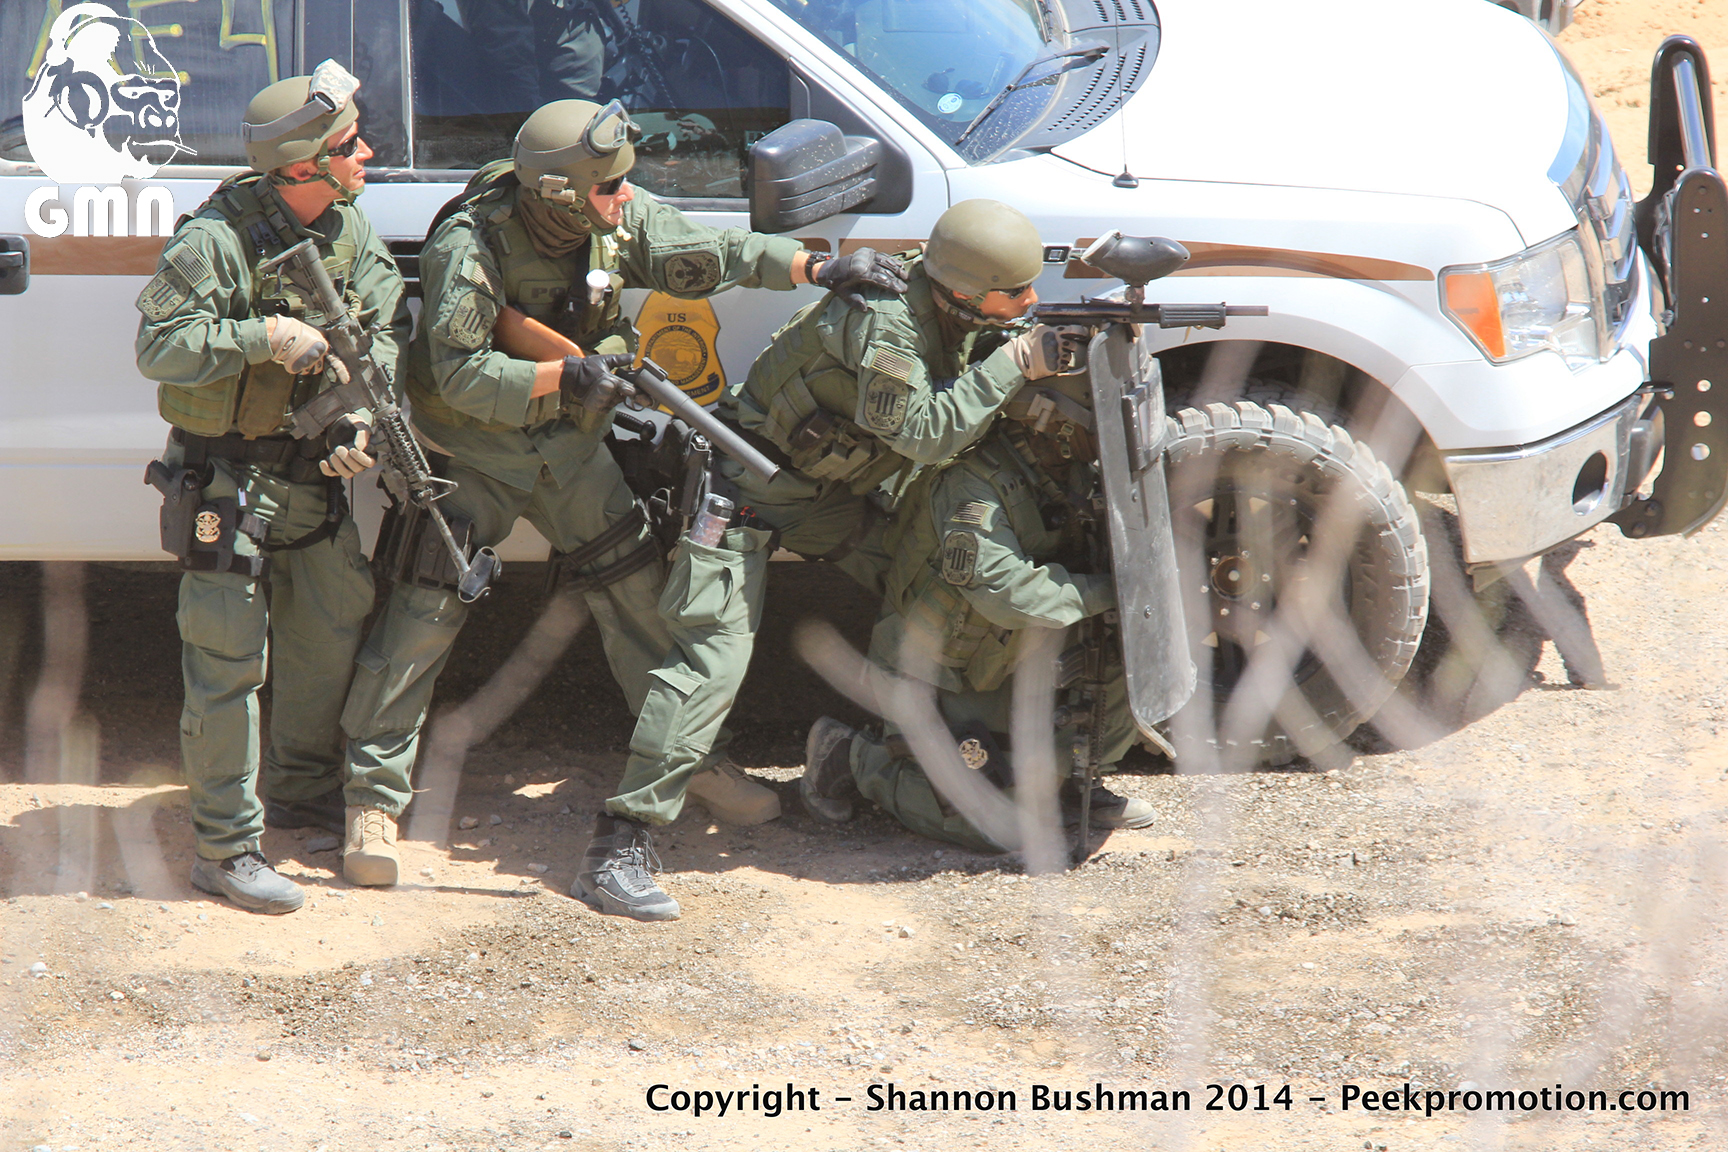 21WIREm-Bundy-Fed-Standoff-April-12-2014-Copyright-GMN